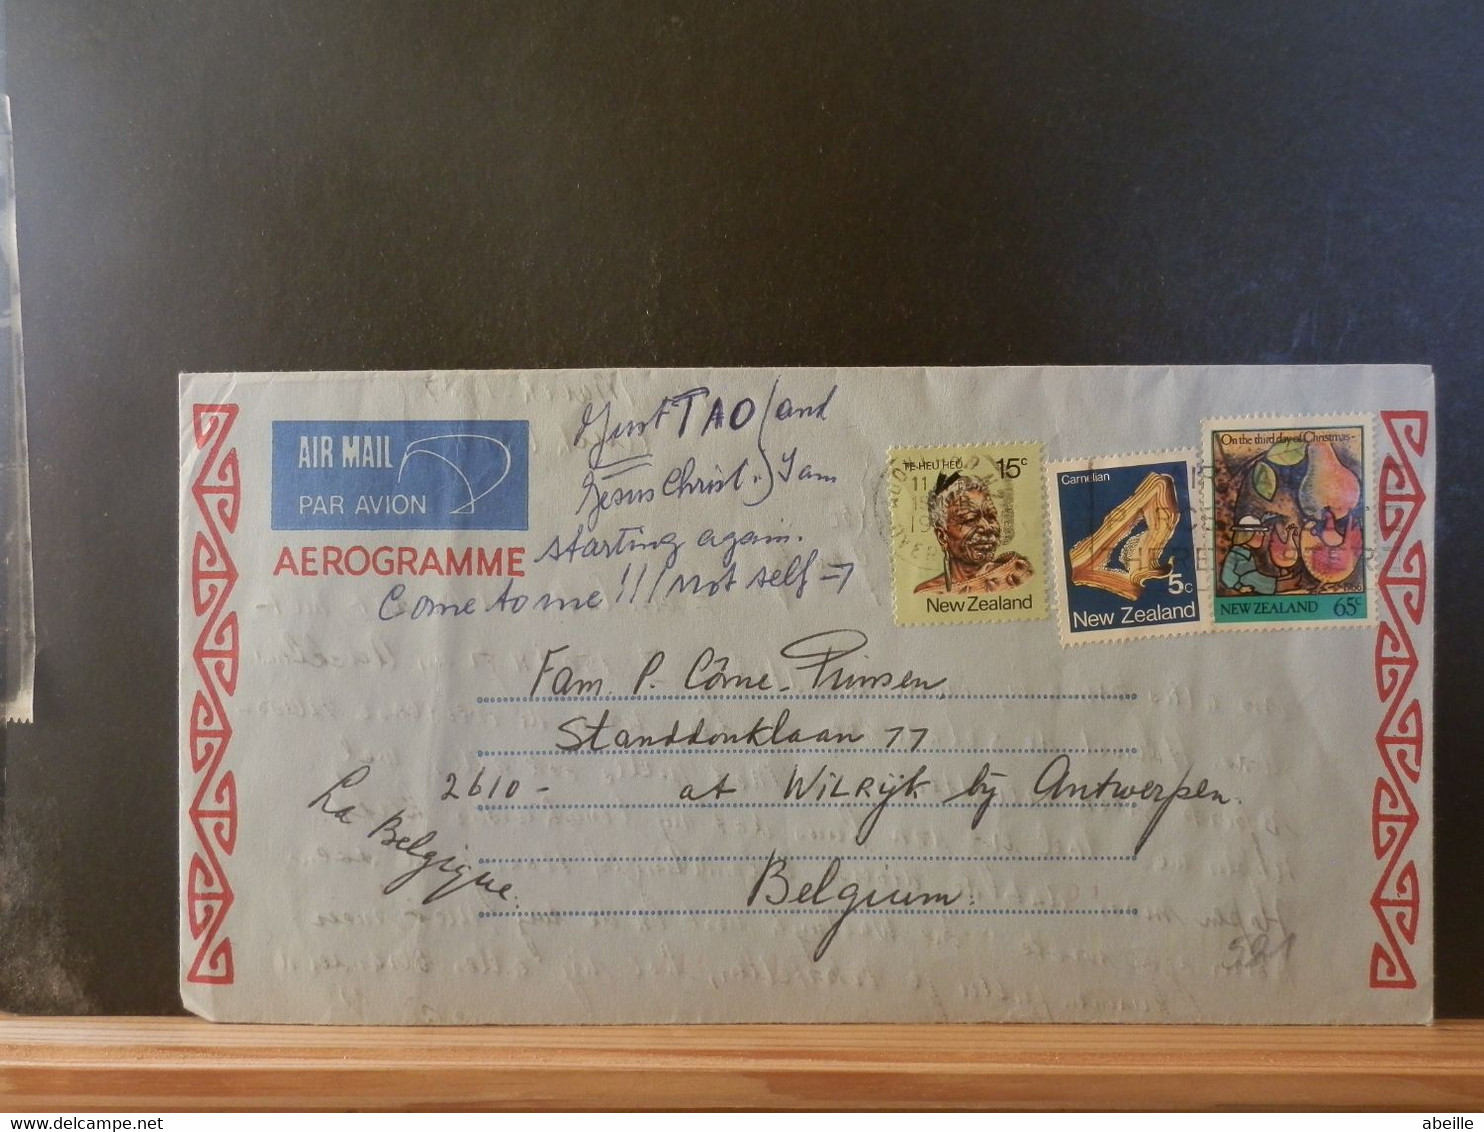 AEROGRAMME LOT 521: AEROGRAMME NEW ZEALAND - Postal Stationery